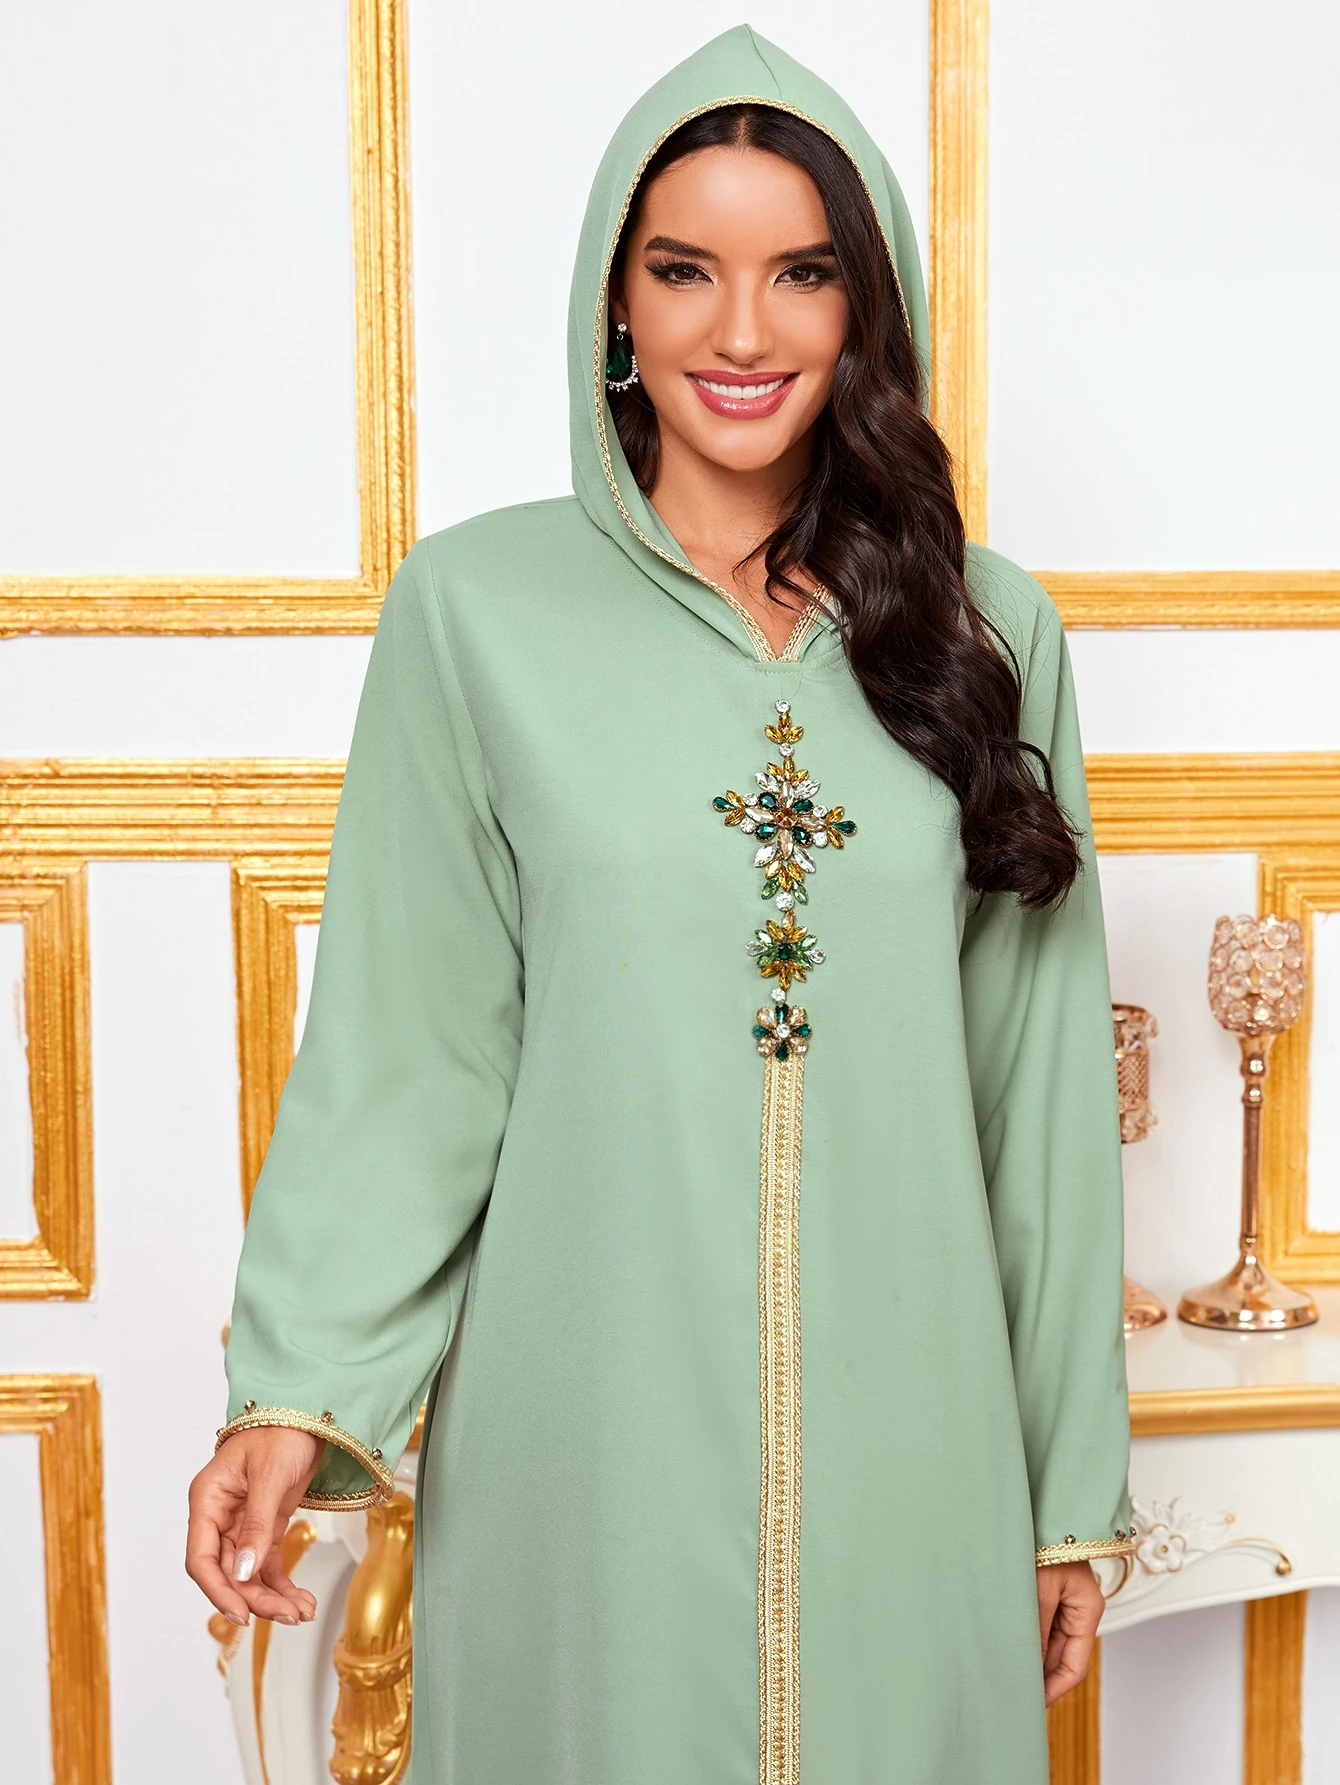 Caftan Marocain Luxury Абая для женщин Dubai 2022, Турция, ислам, кафтан, мусульманский хиджаб, африканские платья для женщин, Арабская одежда